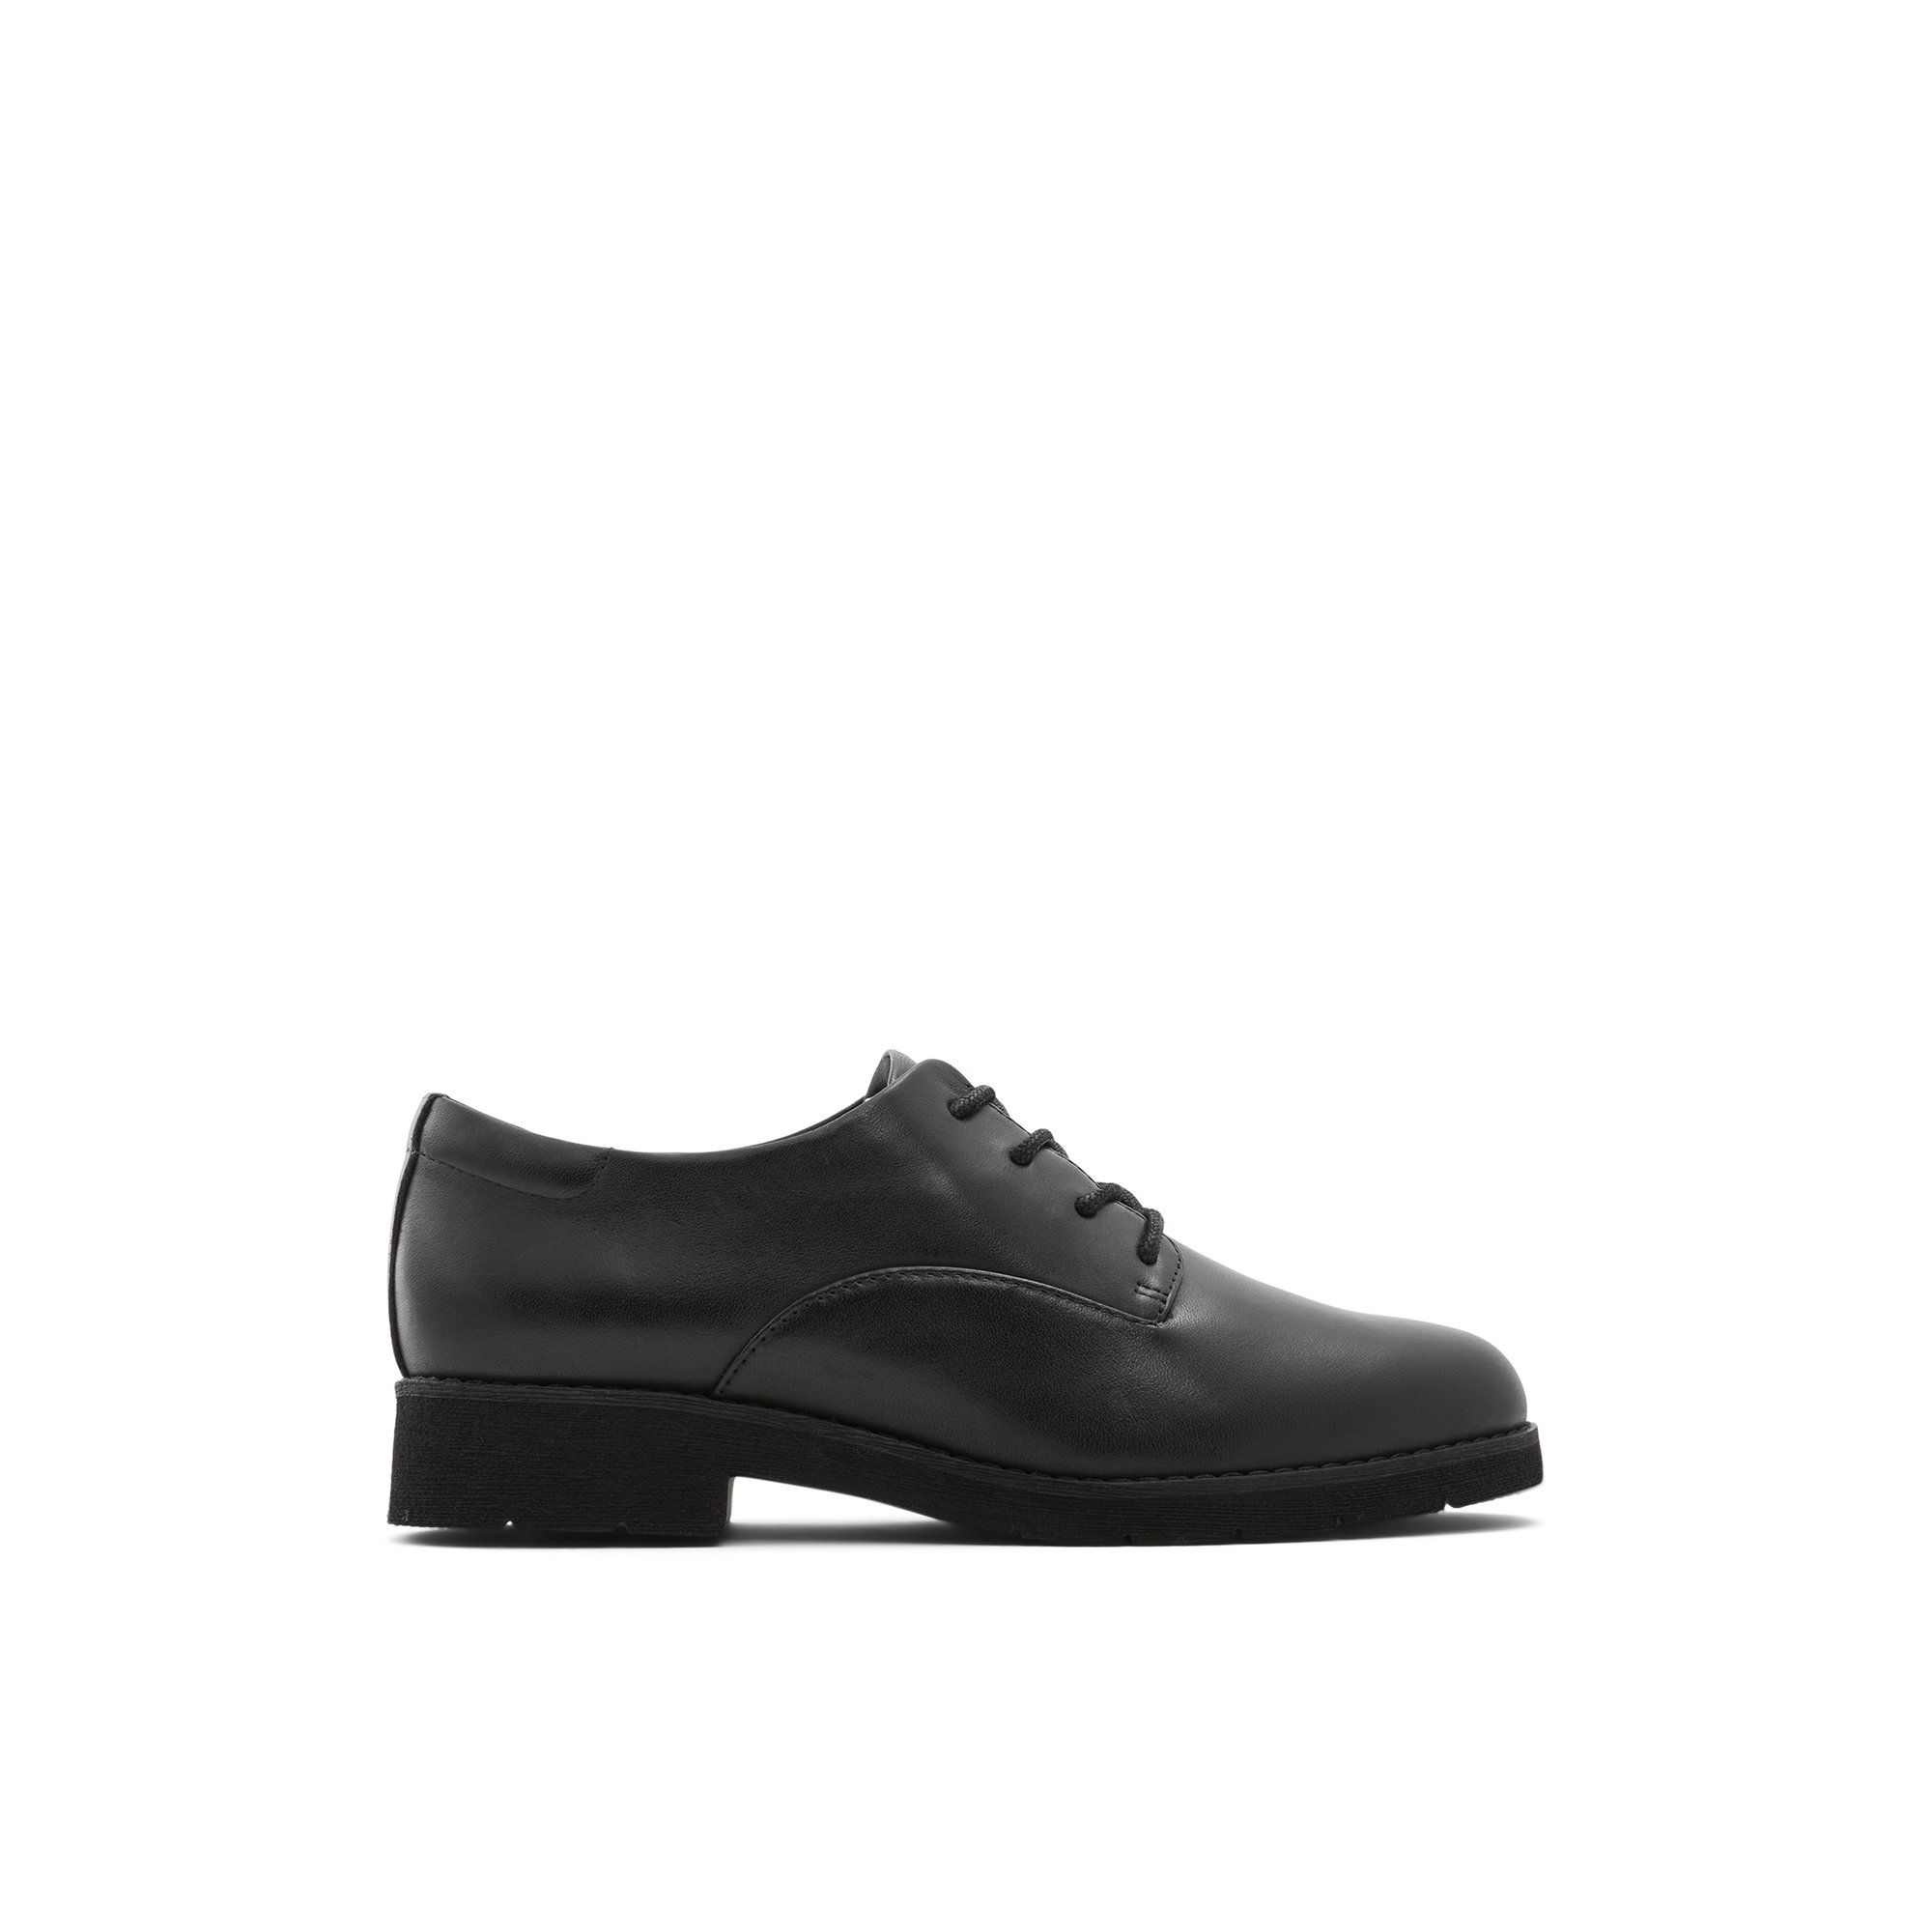 ALDO Cerquedaflex - Women's Loafers - Black